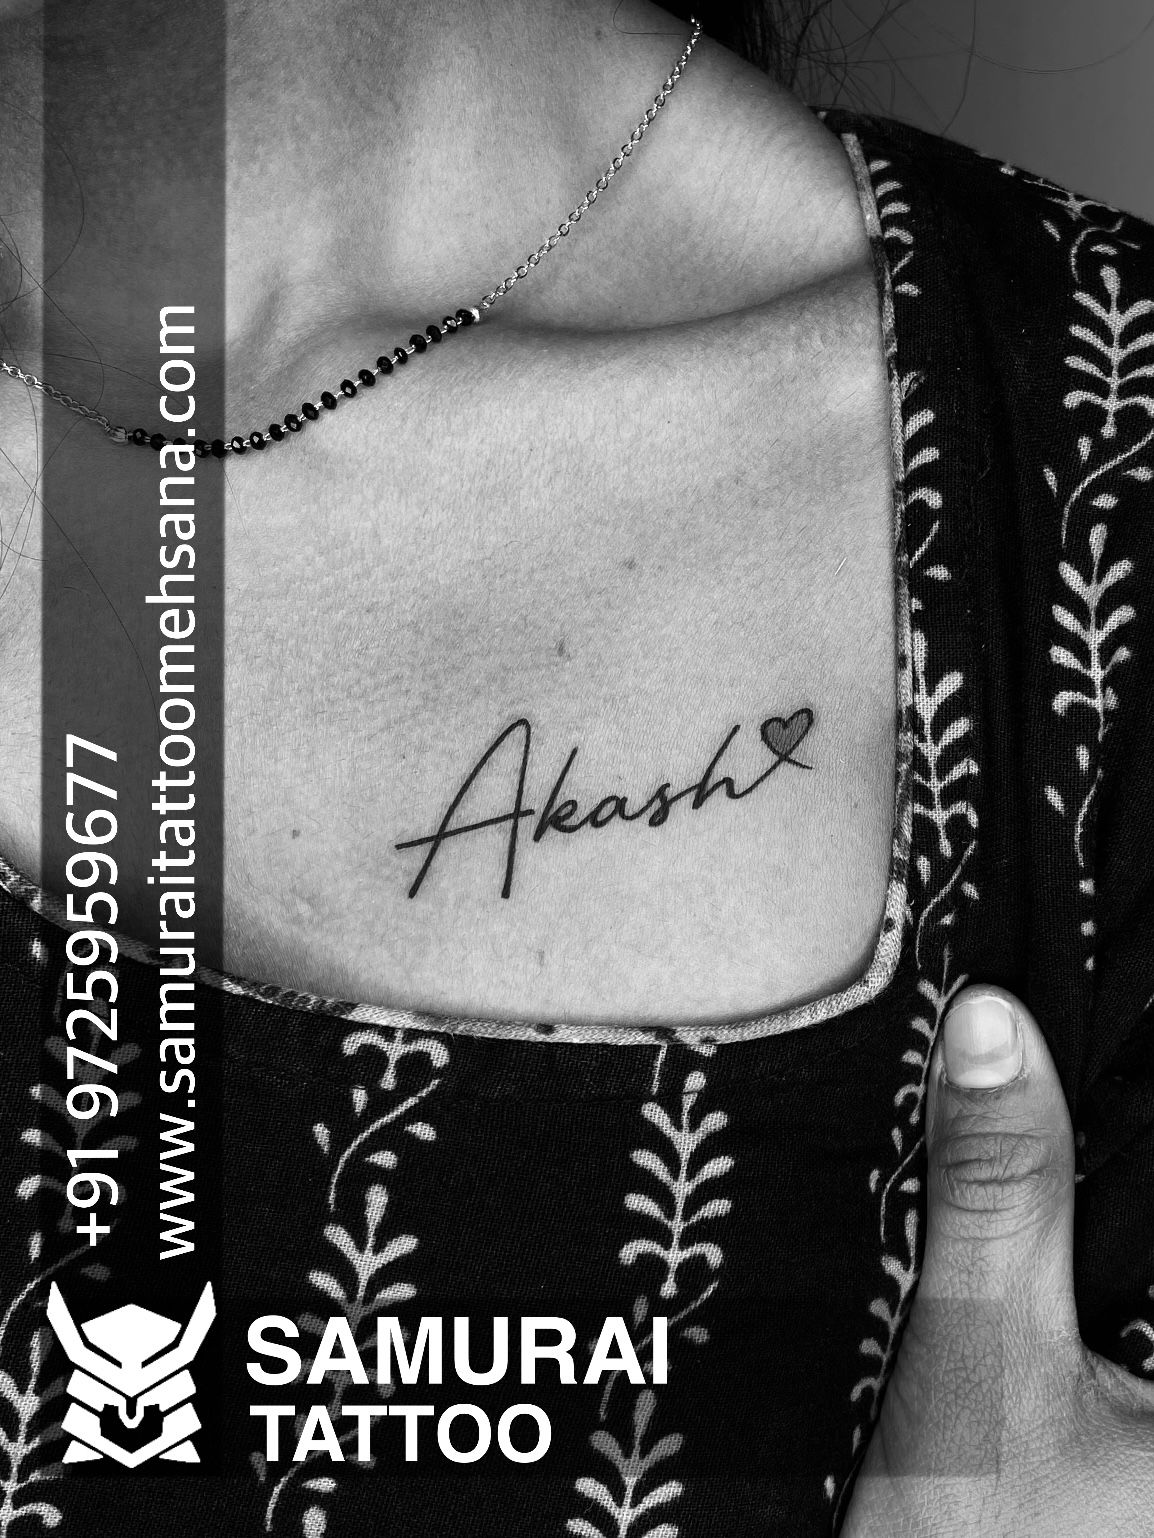 Tattoo Adda - artist Akash - Rage of #nametattoo #tattooaddavns #name tattoo  #chandrika tattoo! # Coming again with new Custom #chandrika tattoo tattoo  series tattoo by Akash Dwivedi Comments apperciated😚 Email for